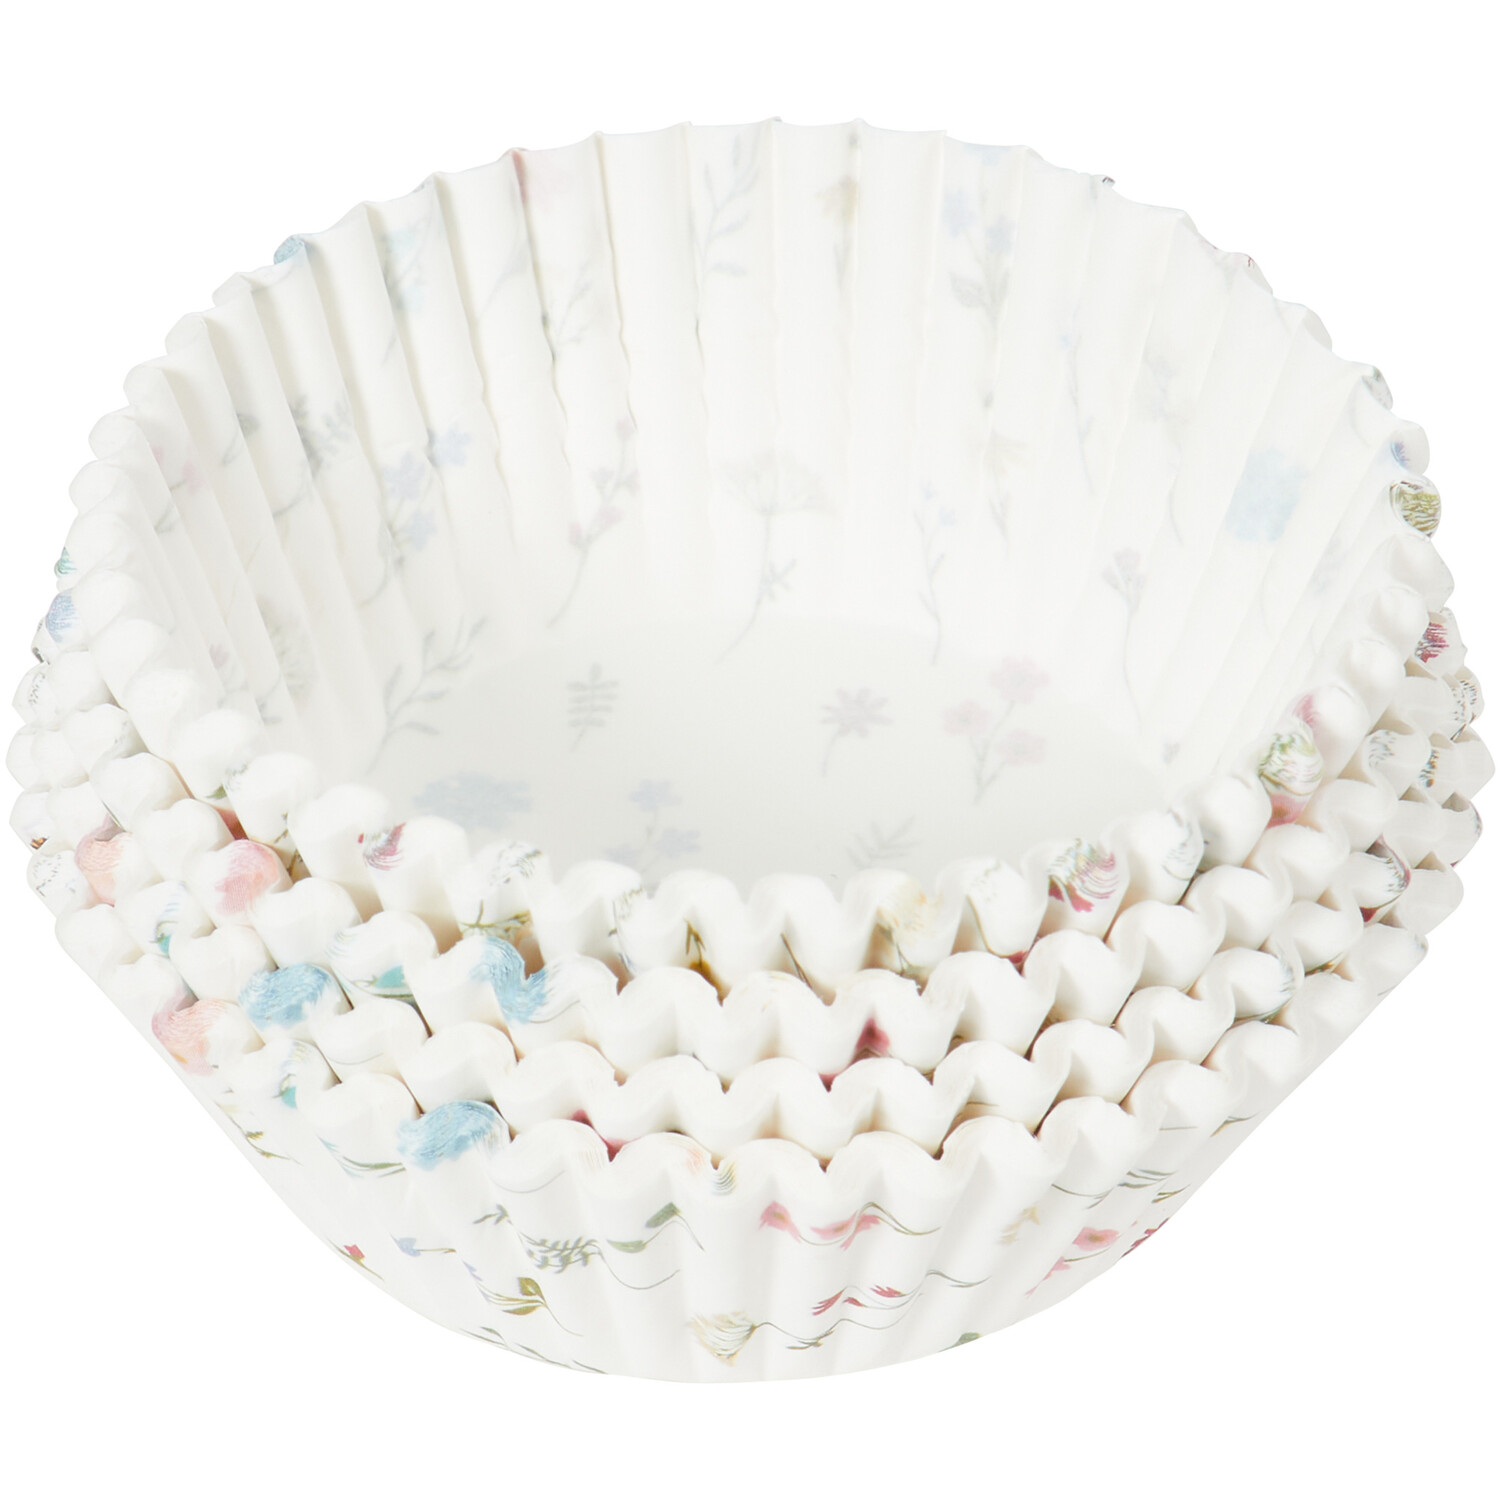 Pack of 100 Flower Market Cupcake Cases - White Image 2